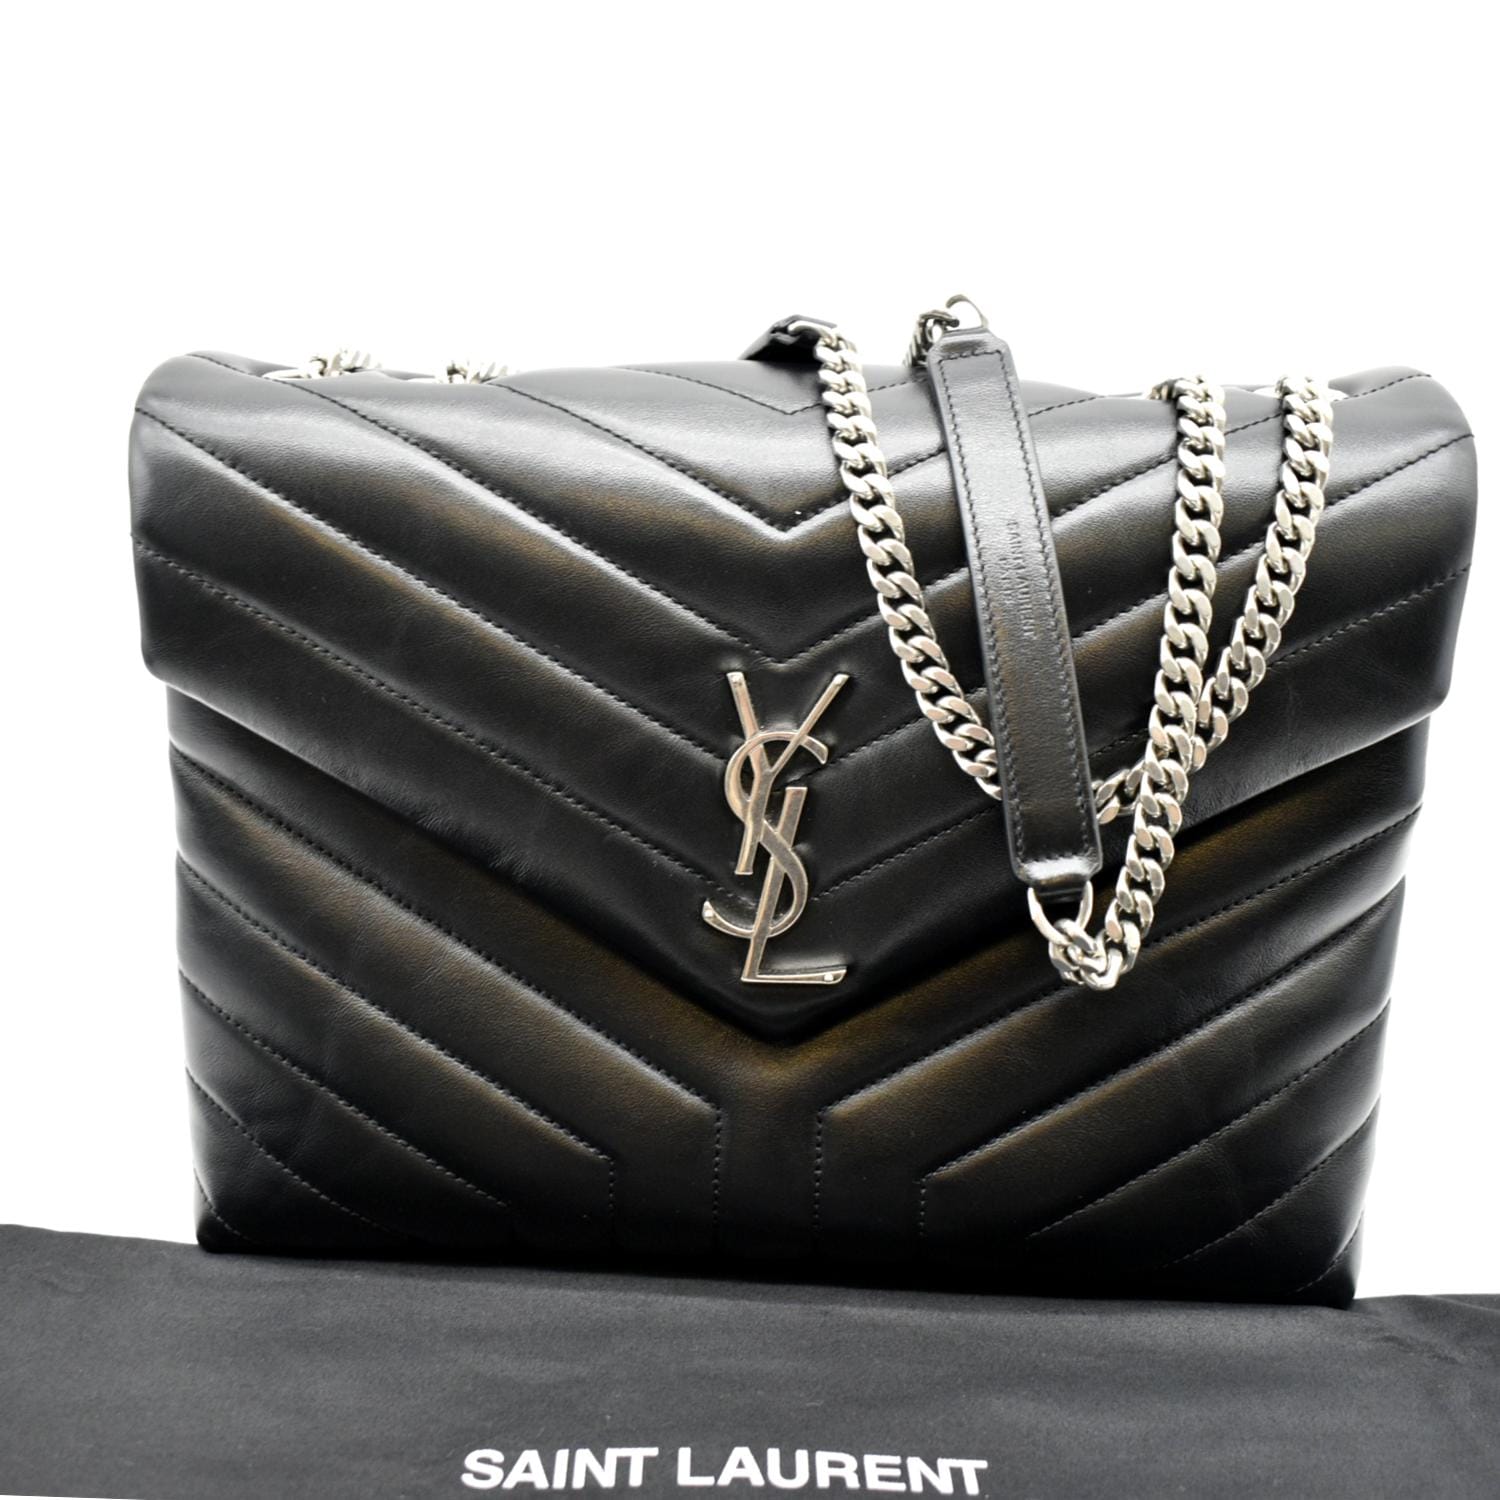 Yves Saint Laurent Loulou Medium Matelasse Leather Bag